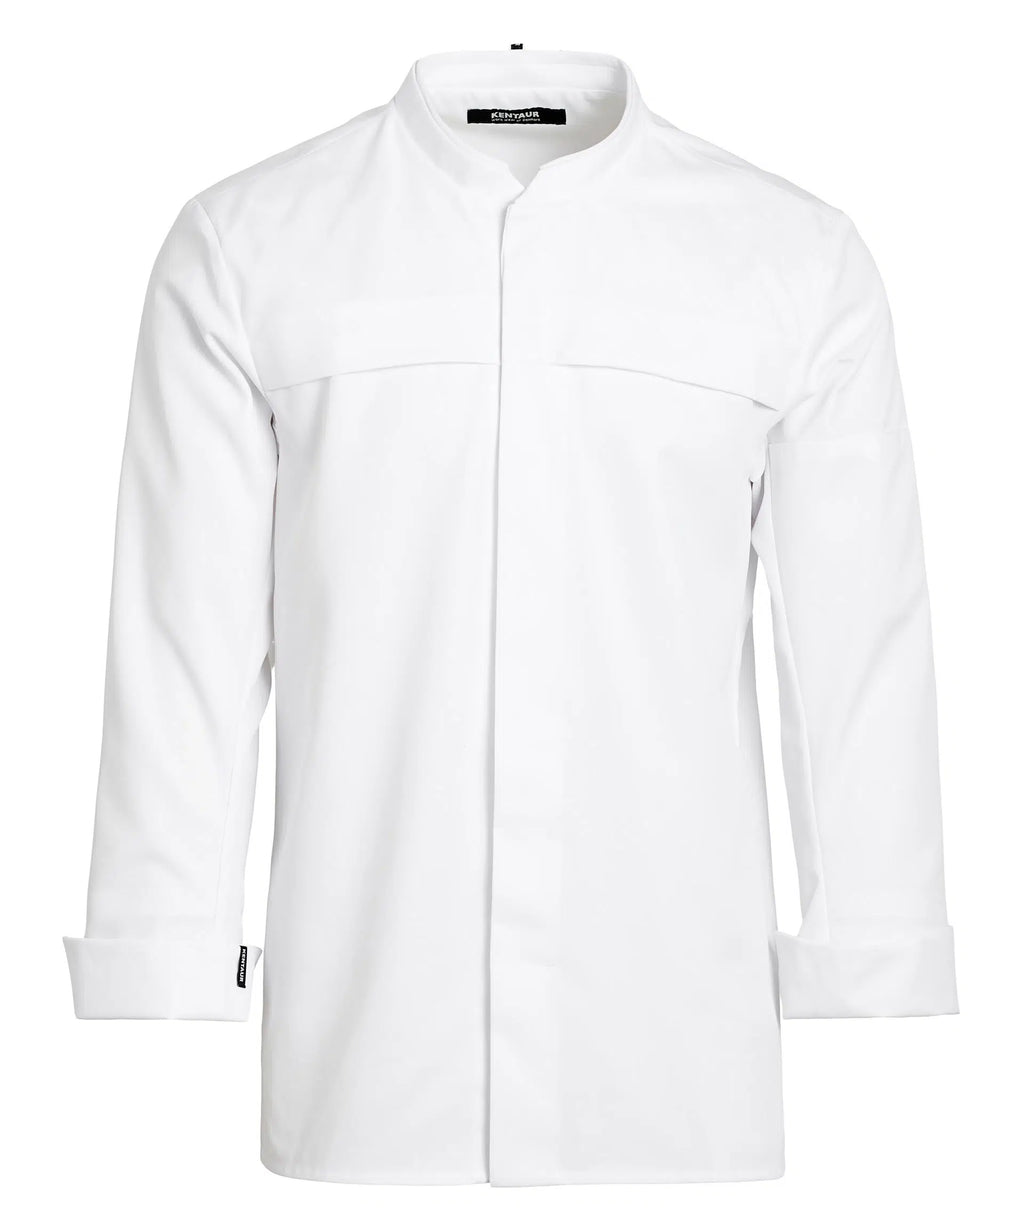 Kentaur 25265 Tencel Chef/Service Shirt Front